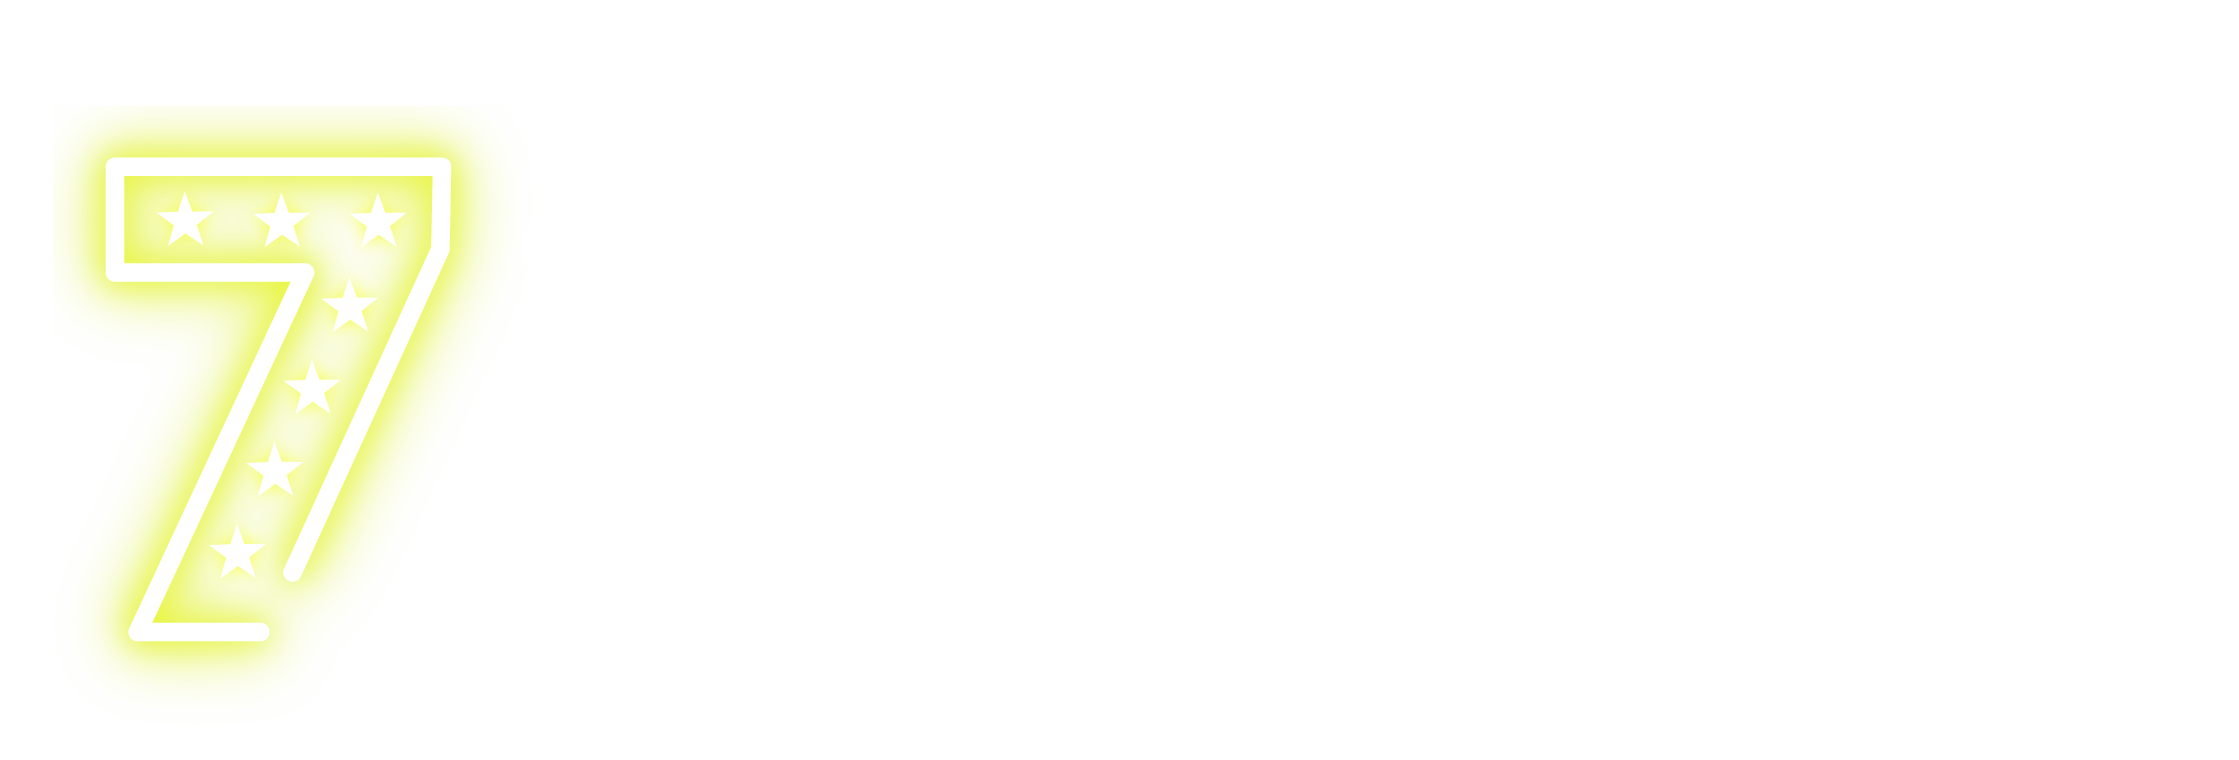 7 stars standard $65,000 cash discount